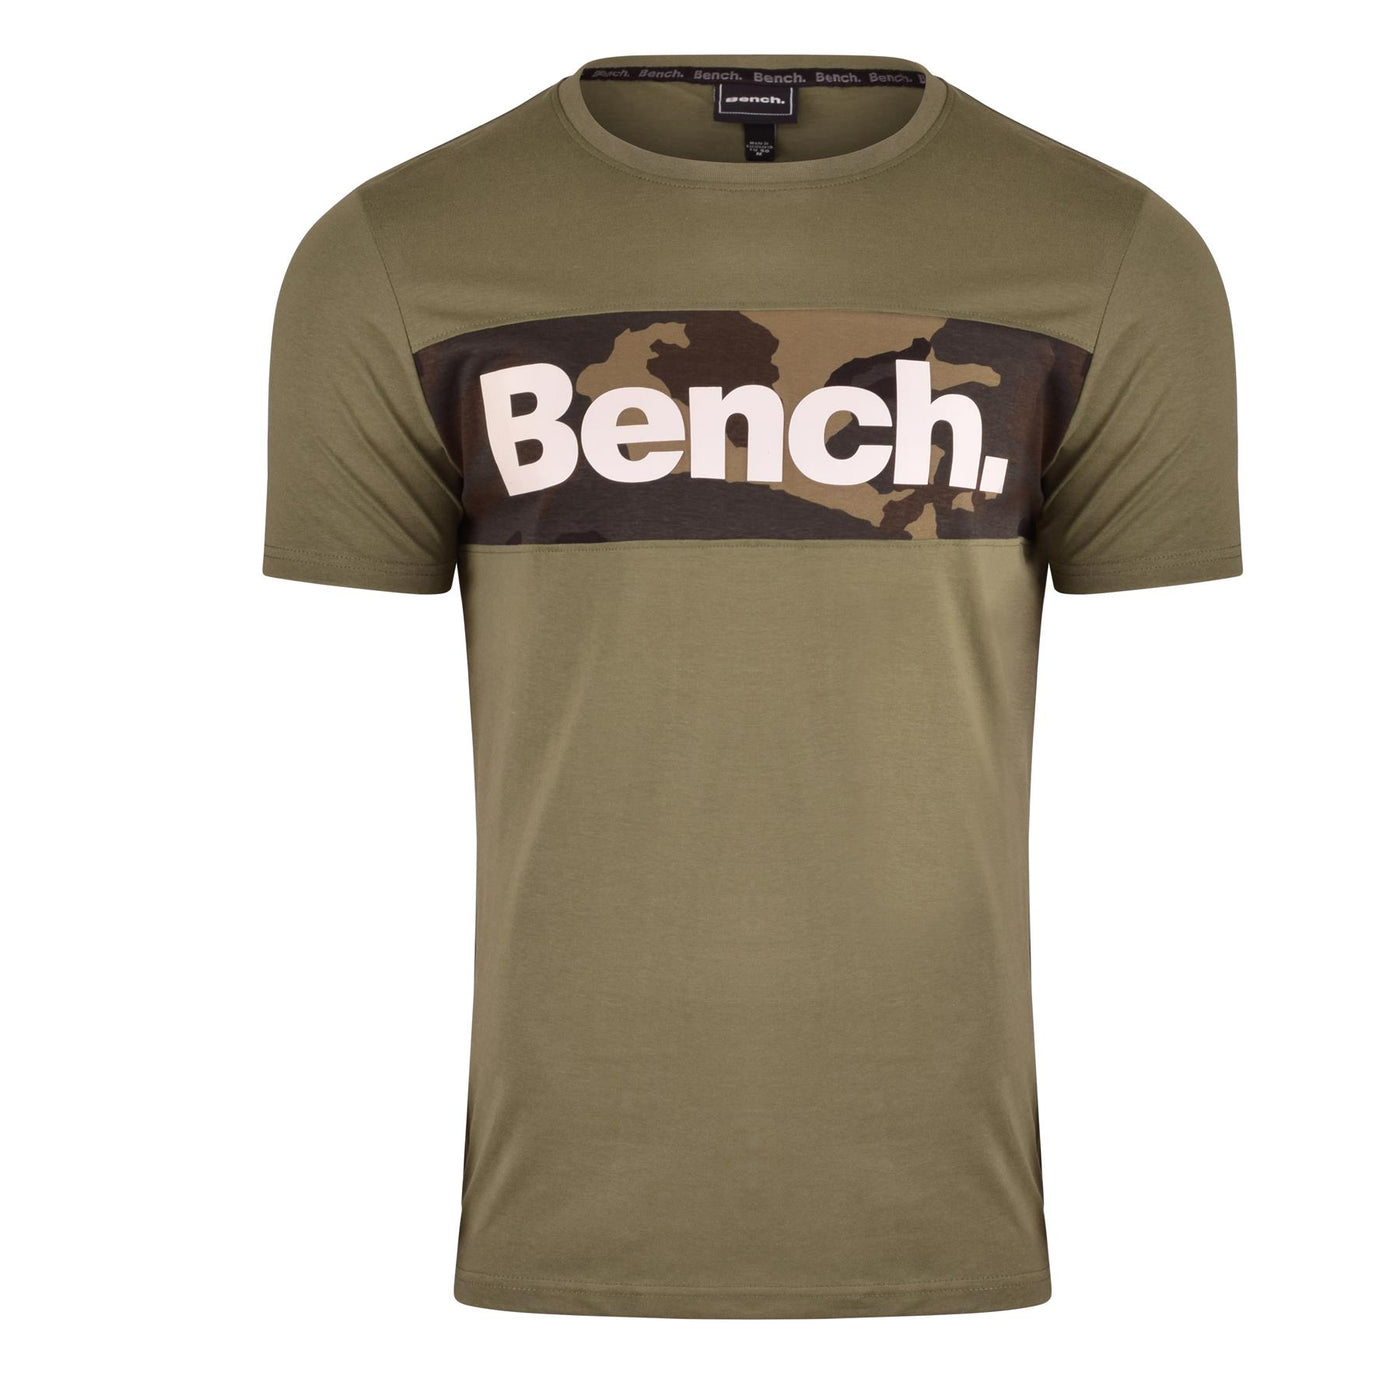 Mens Bench Camo Panel T-Shirt Designer Cotton Jersey Tee Short Sleeve Crew Neck